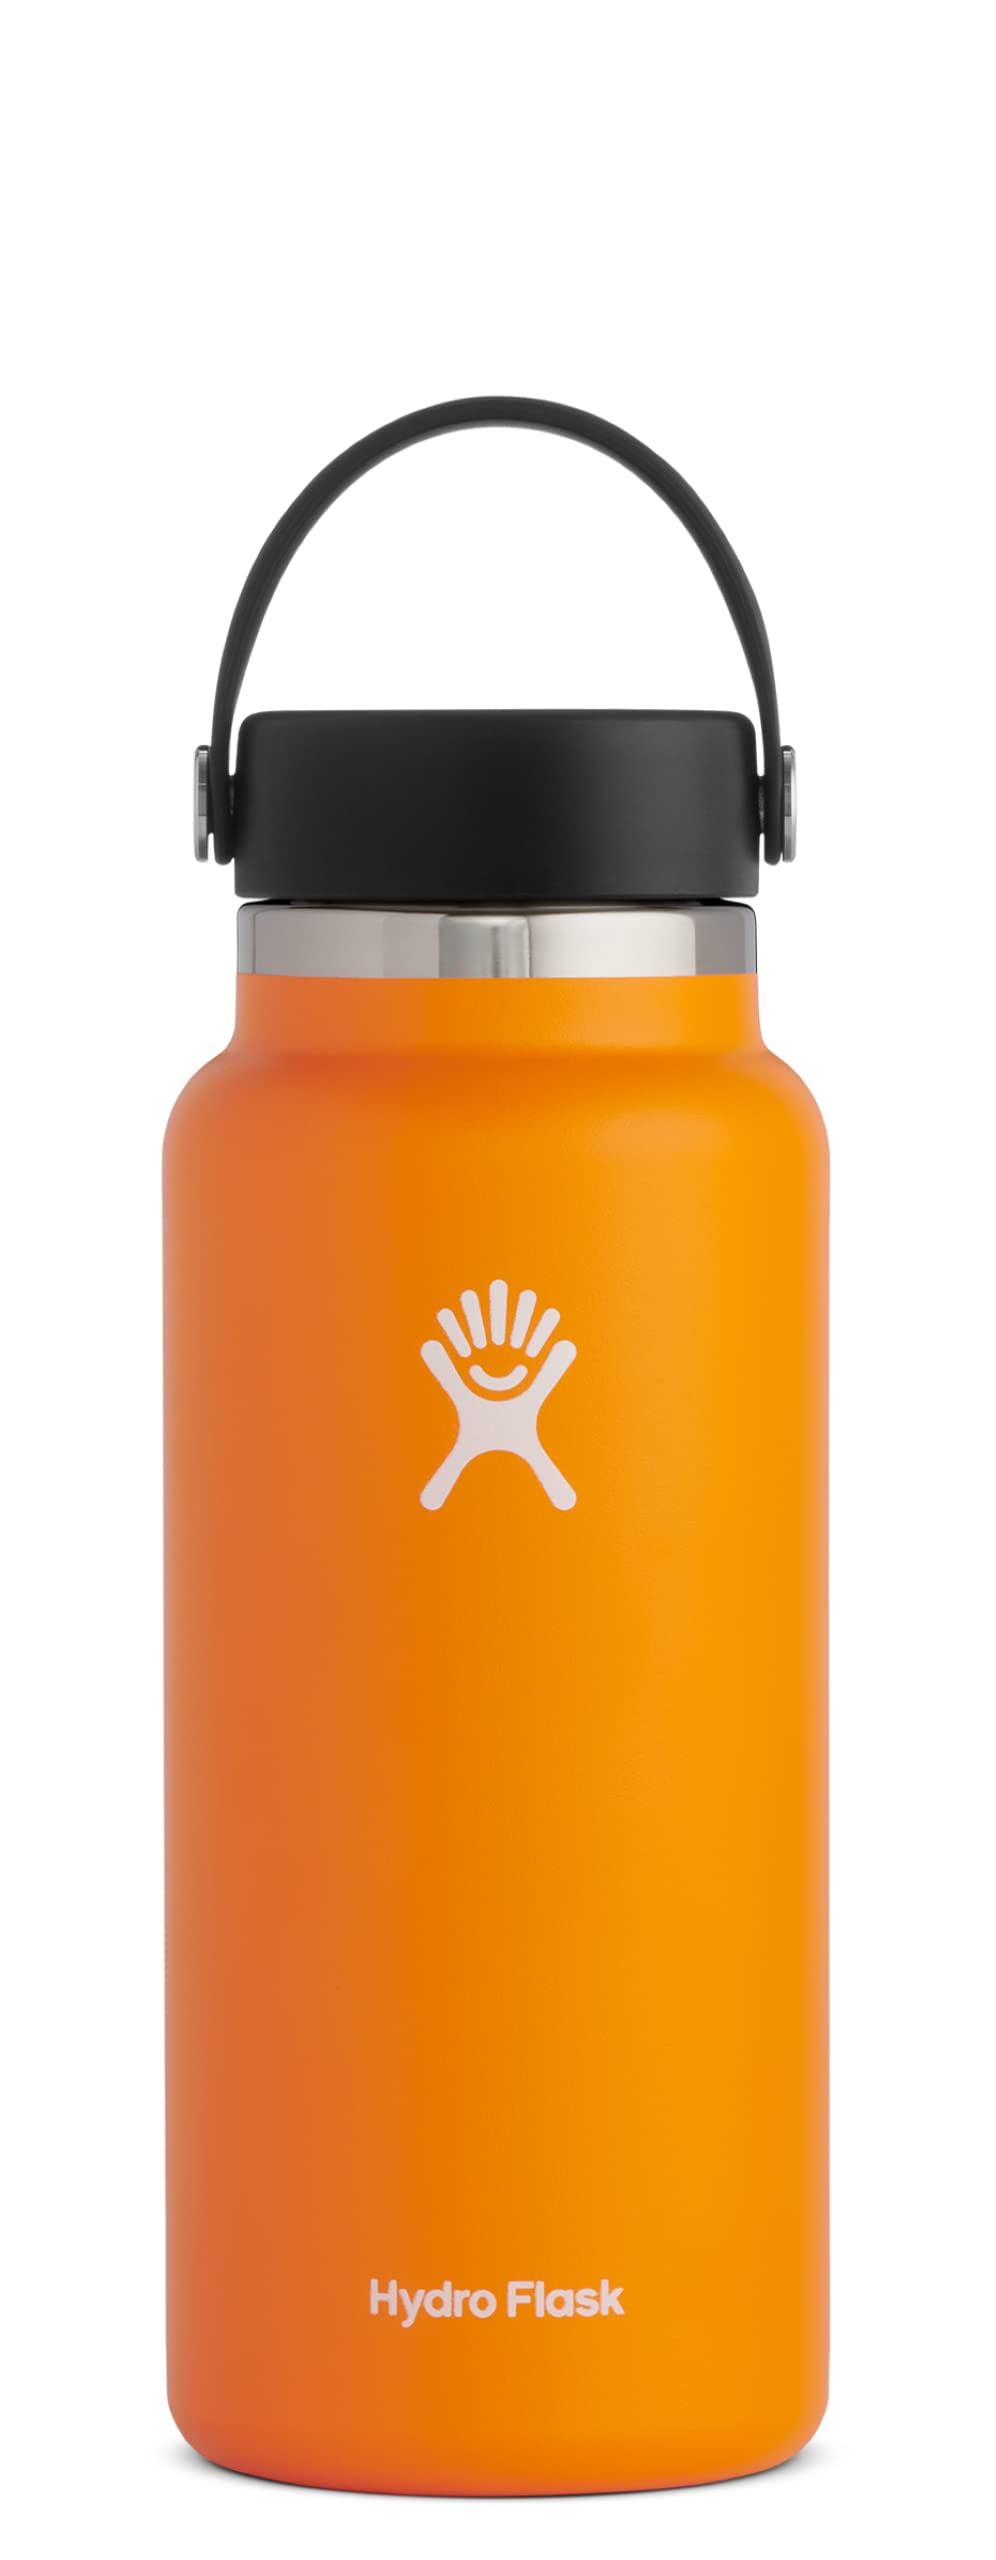 Hydro Flask フレックスキャップ付広口ボトル